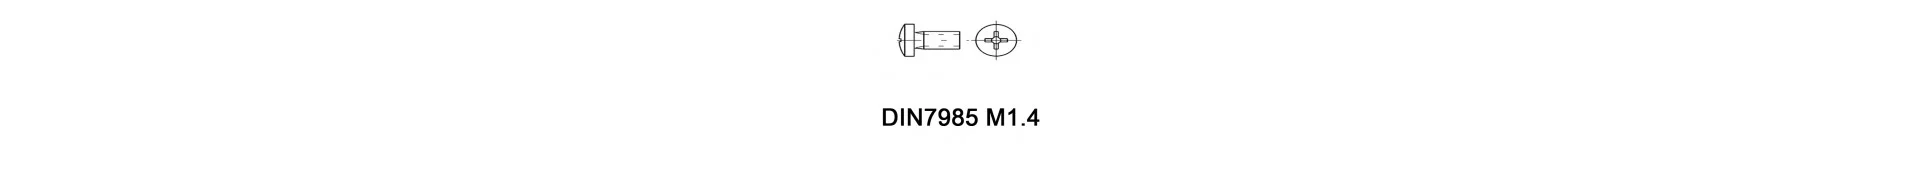 DIN7985 M1.4